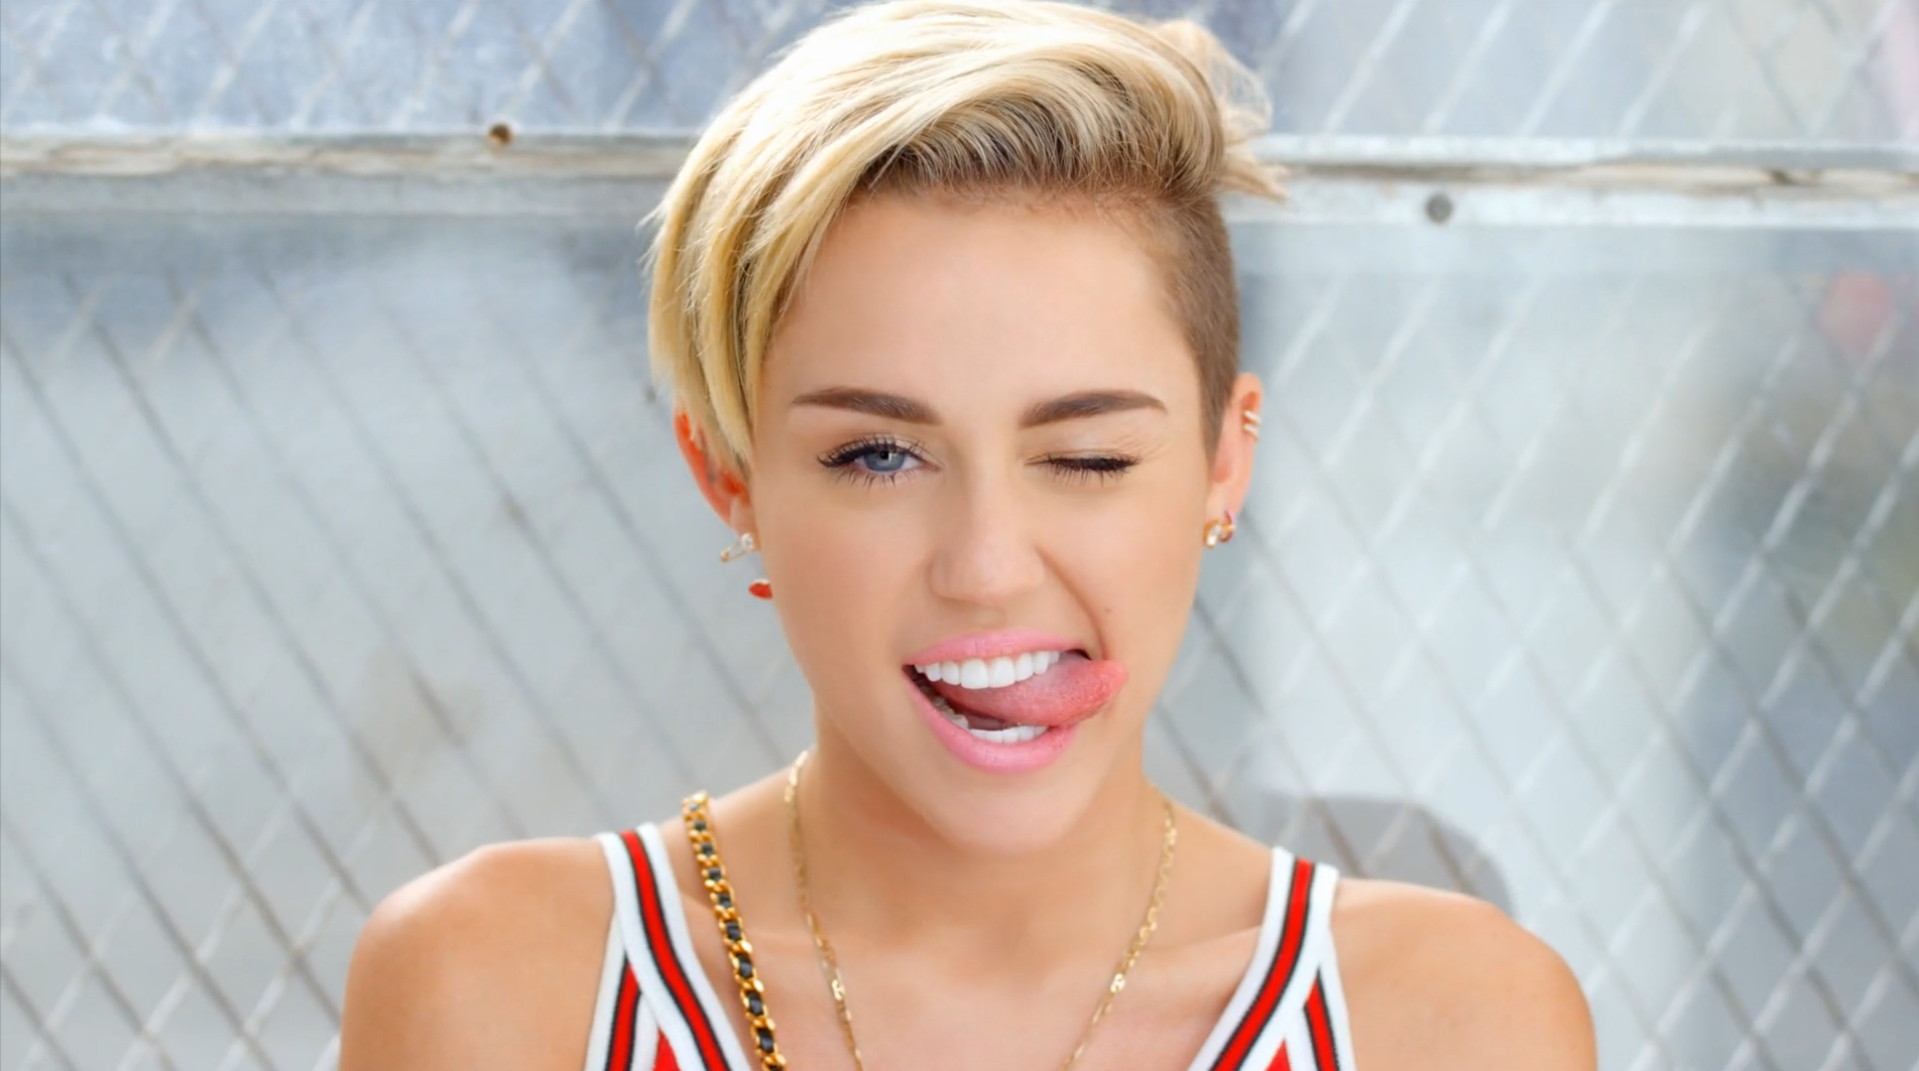 Miley Cyrus HD Wallpaper Pack